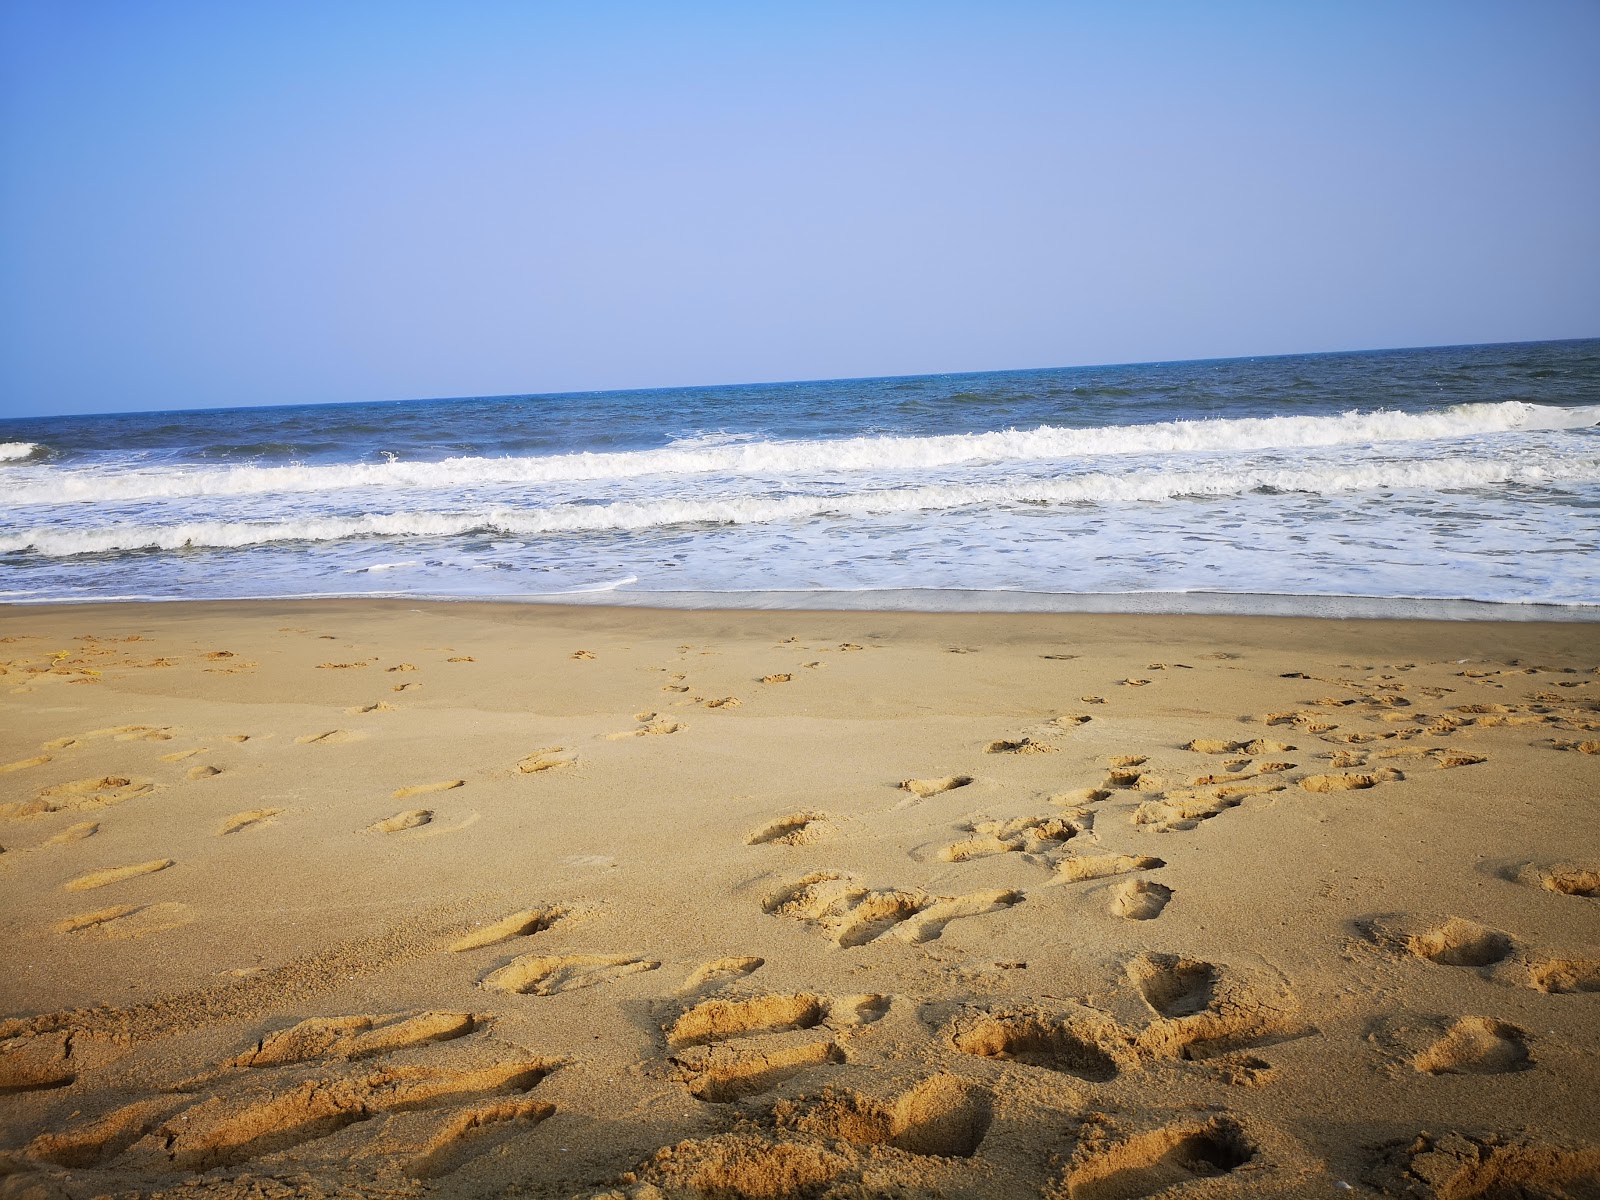 Fotografie cu White Beach - locul popular printre cunoscătorii de relaxare